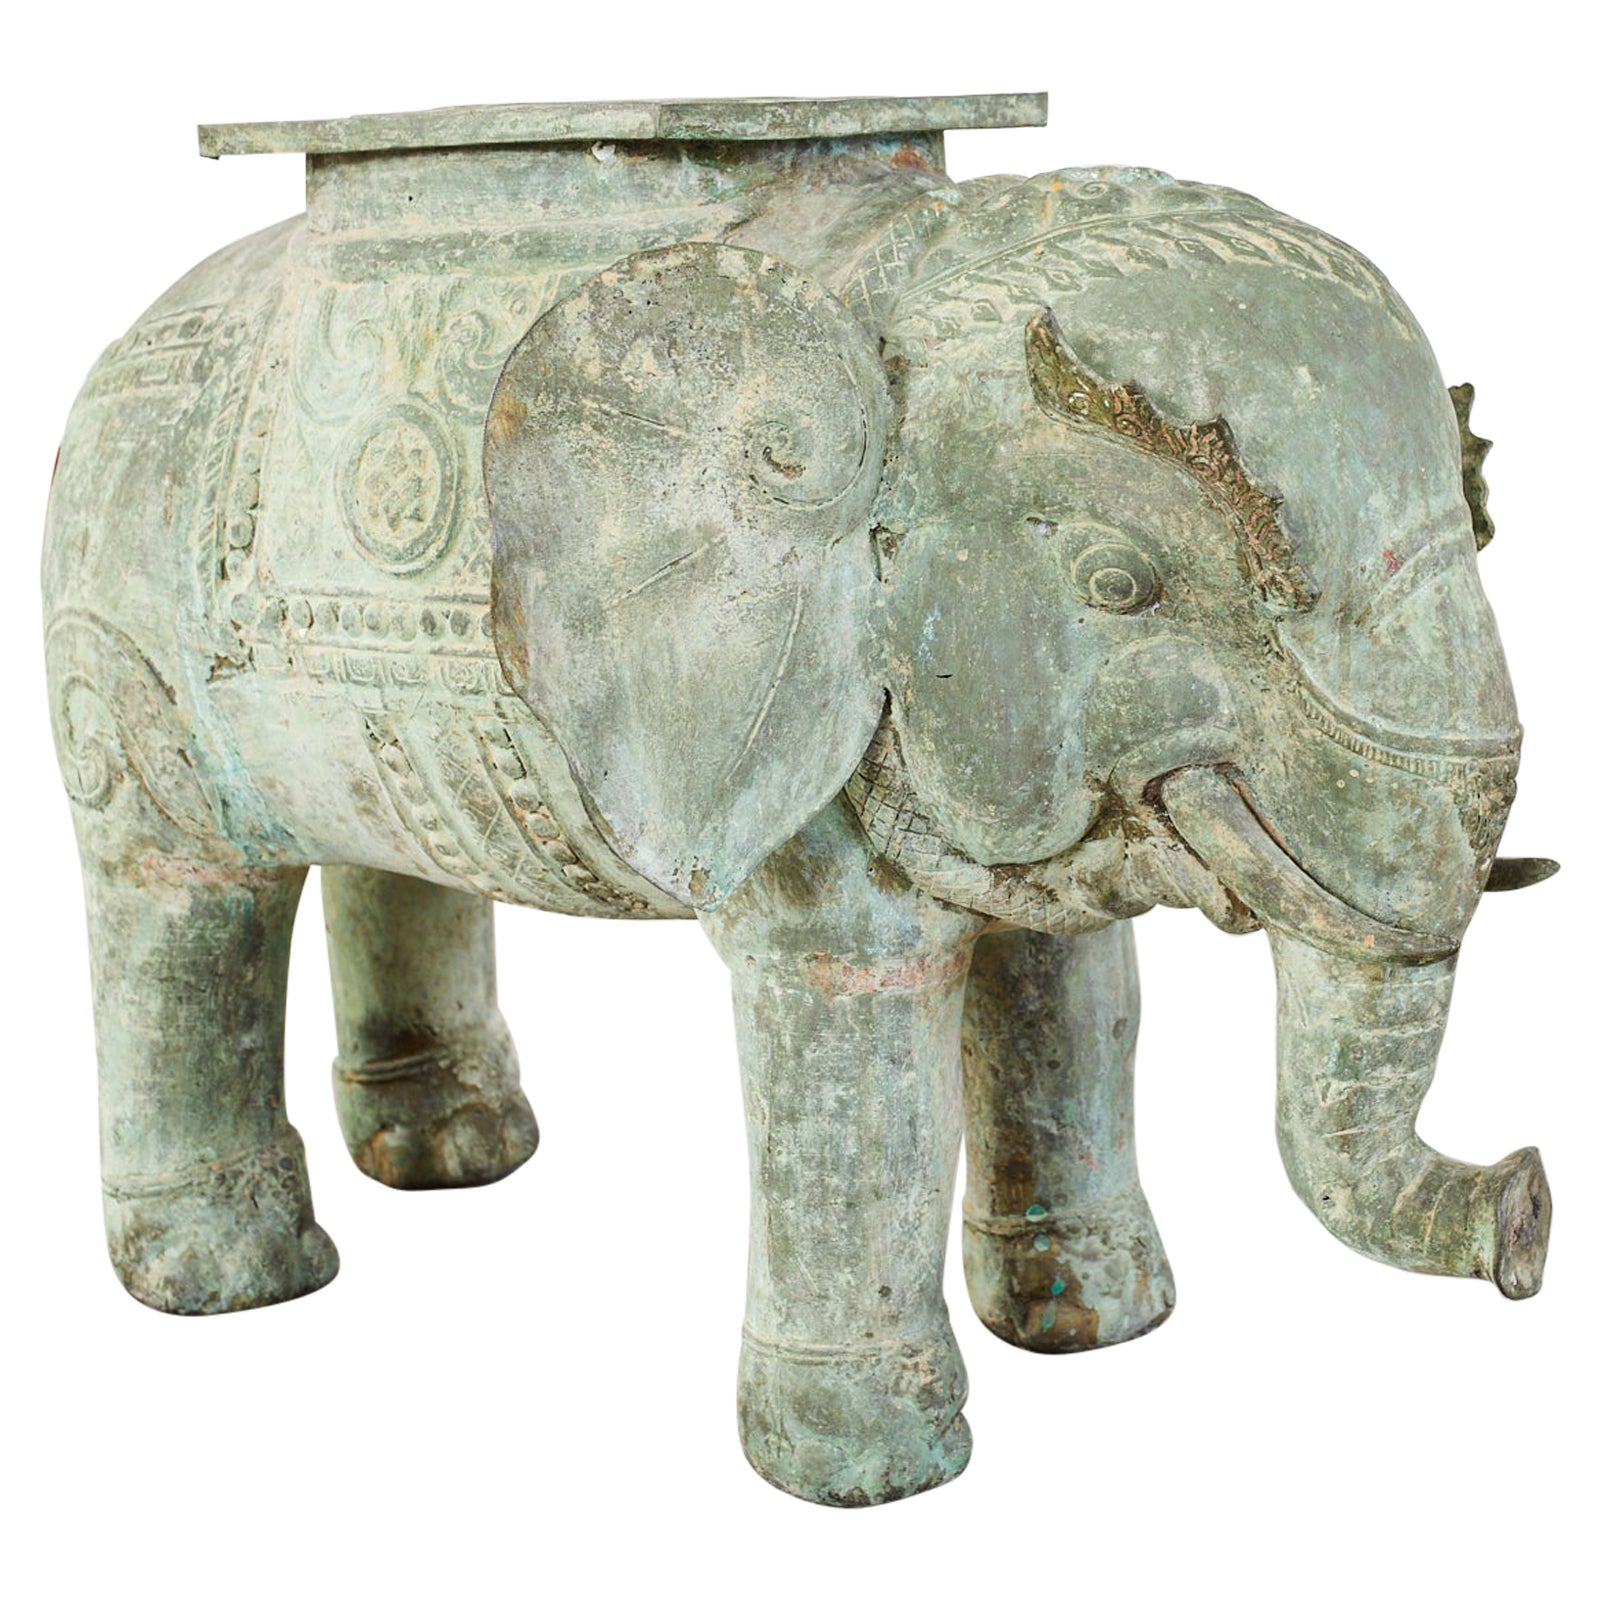 Burmese Patinated Bronze Elephant Garden Stool or Drink Table